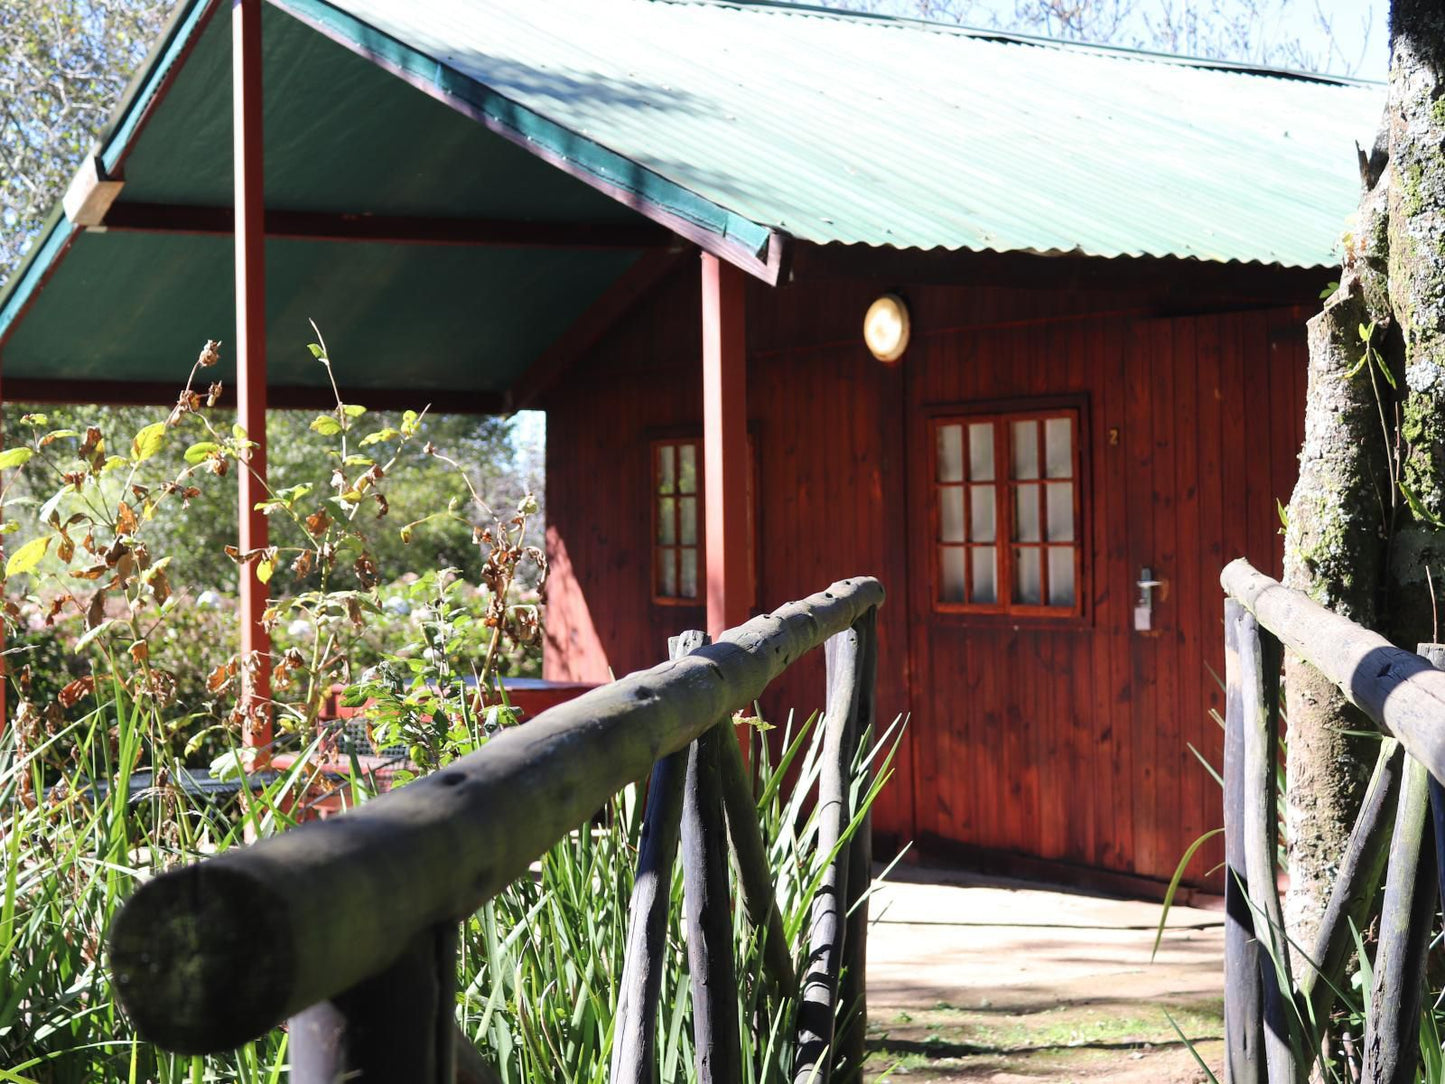 Mount Park Guest Farm Dargle Howick Kwazulu Natal South Africa Cabin, Building, Architecture